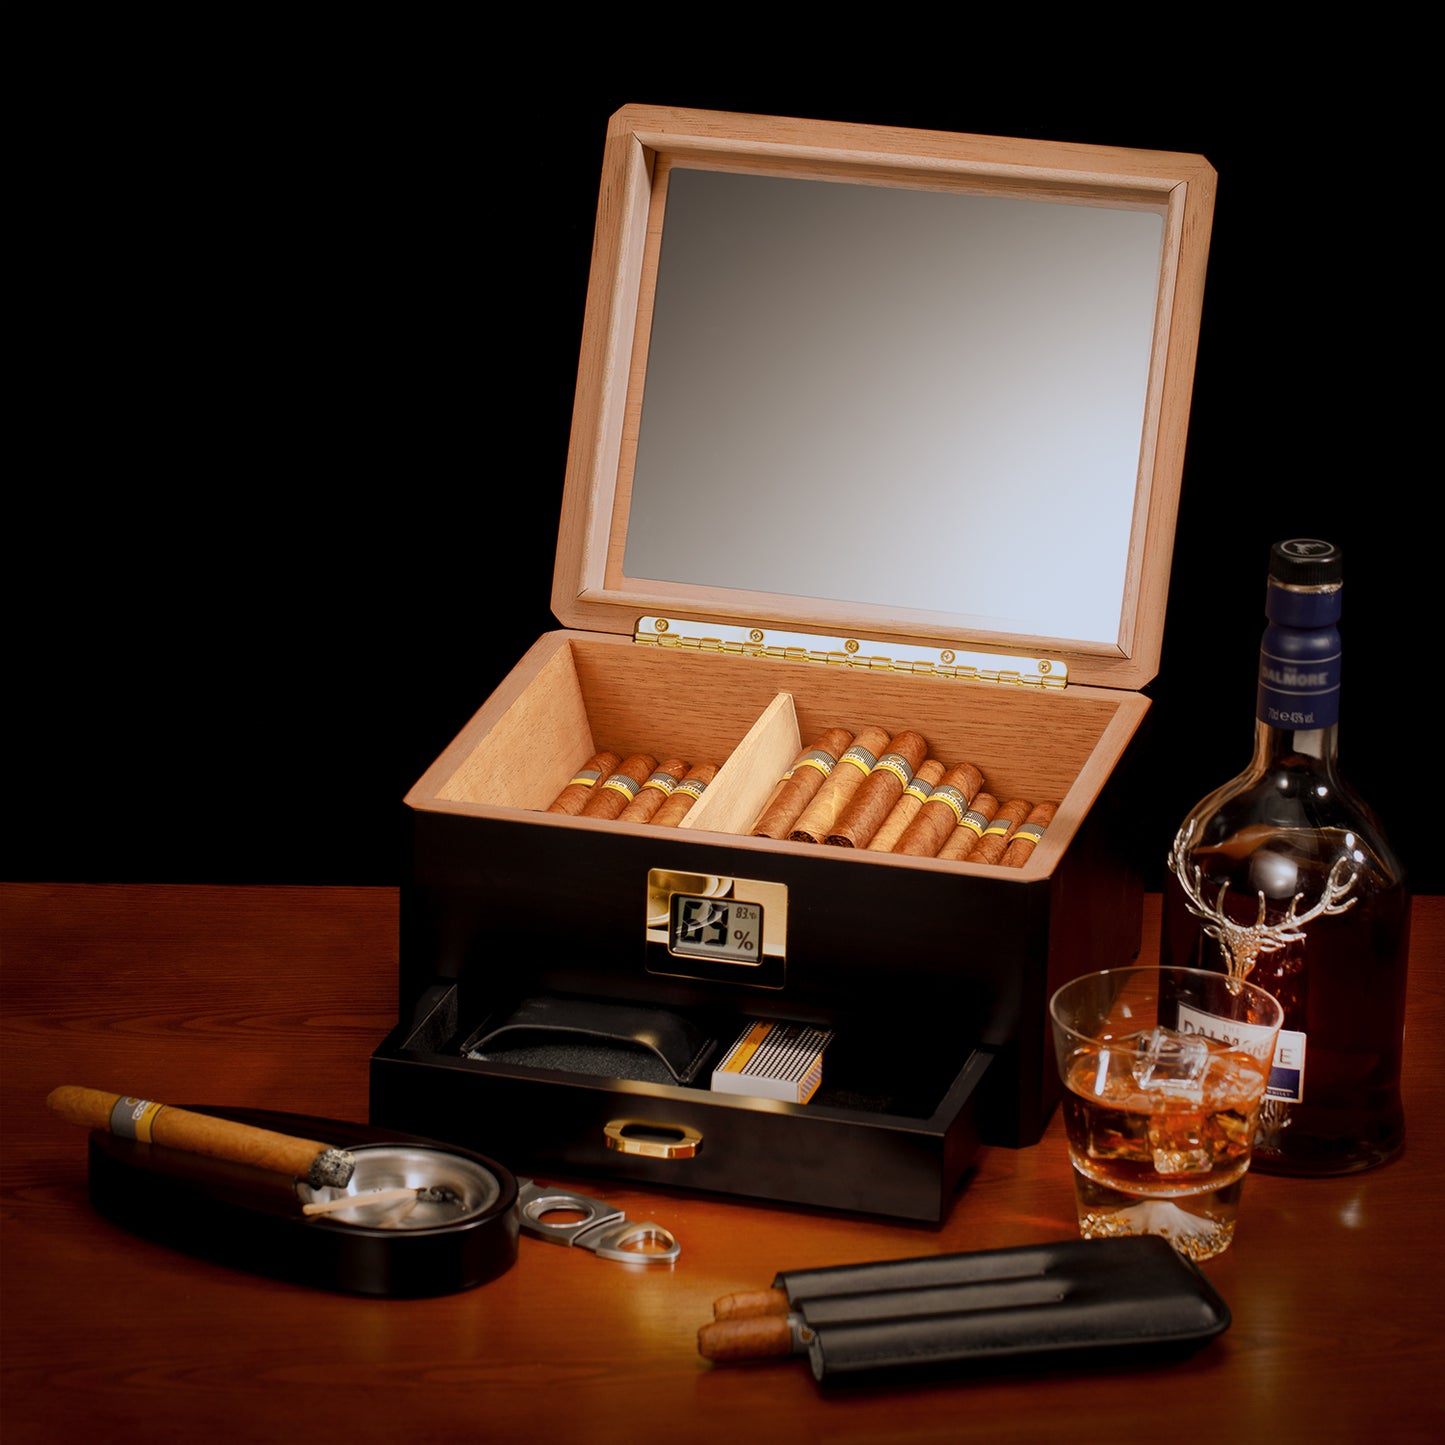 Woodronic Enstatit A5043 Cigar Humidor, 25-50 ct with 72% Boveda Packs